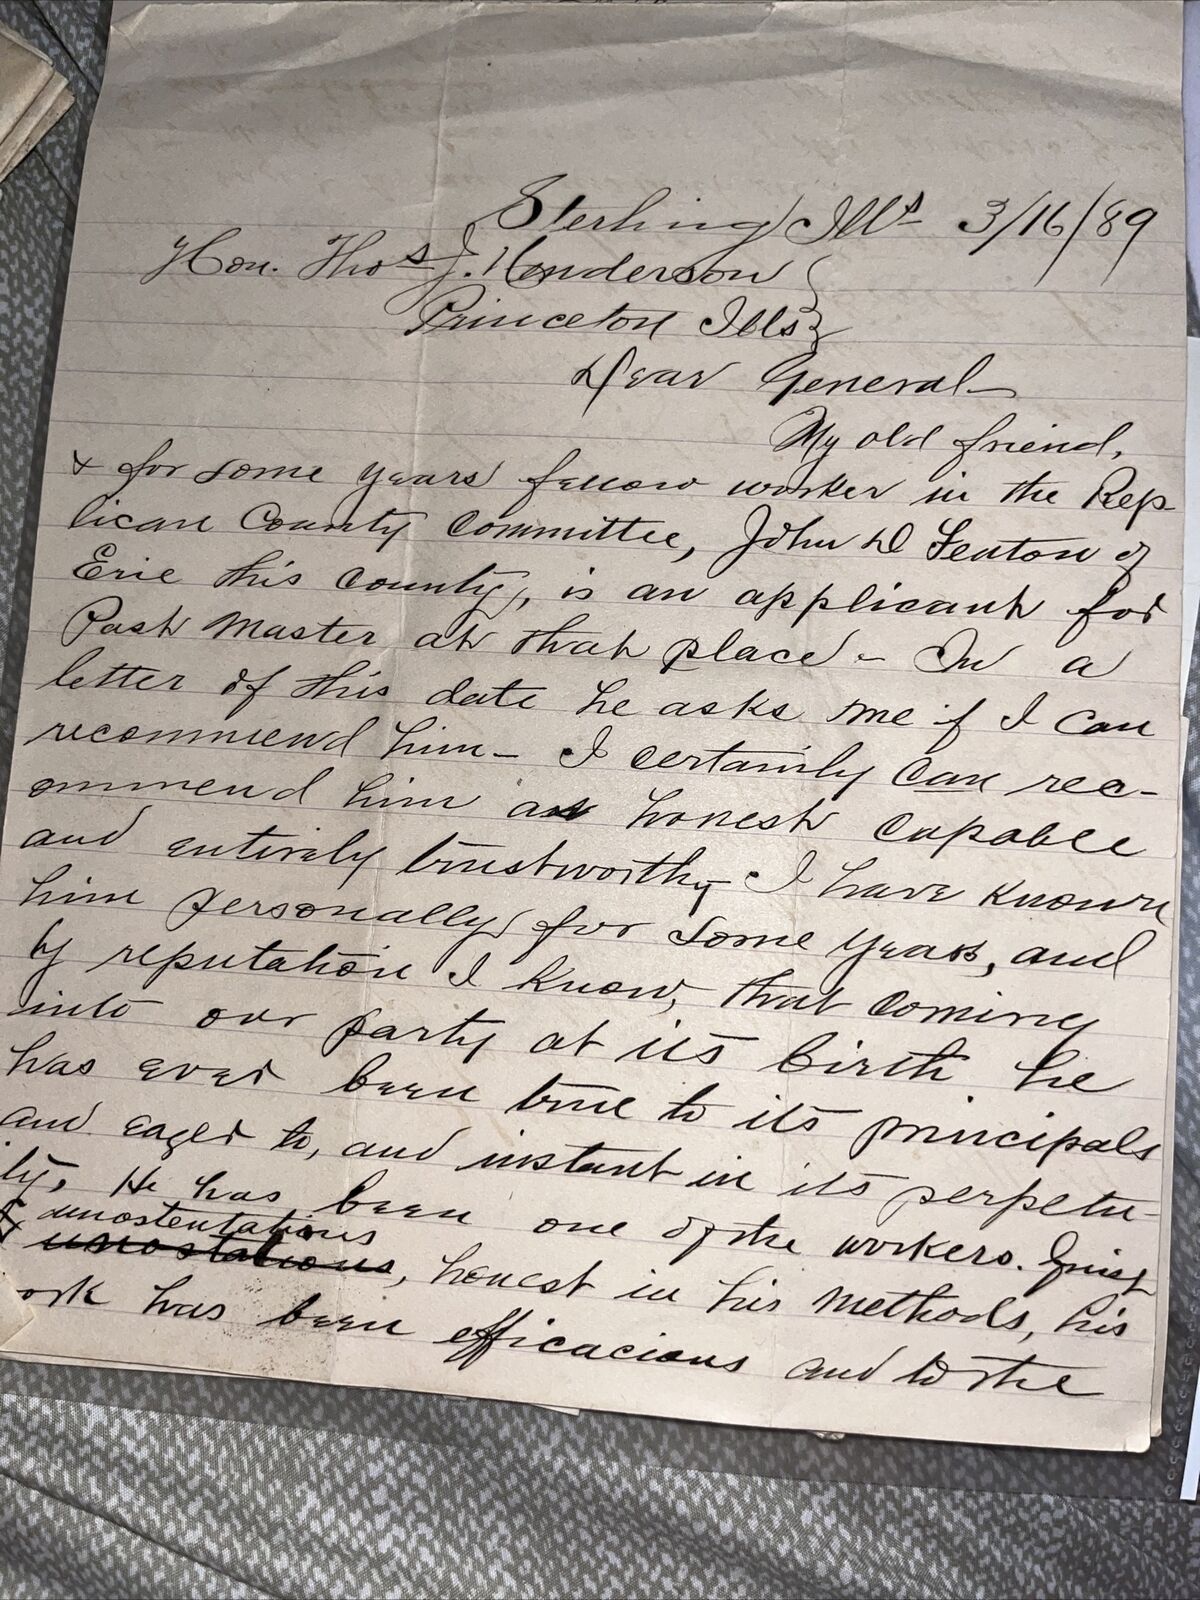 1889 Postmaster Recommendation to Congressman & Union General Thomas Henderson